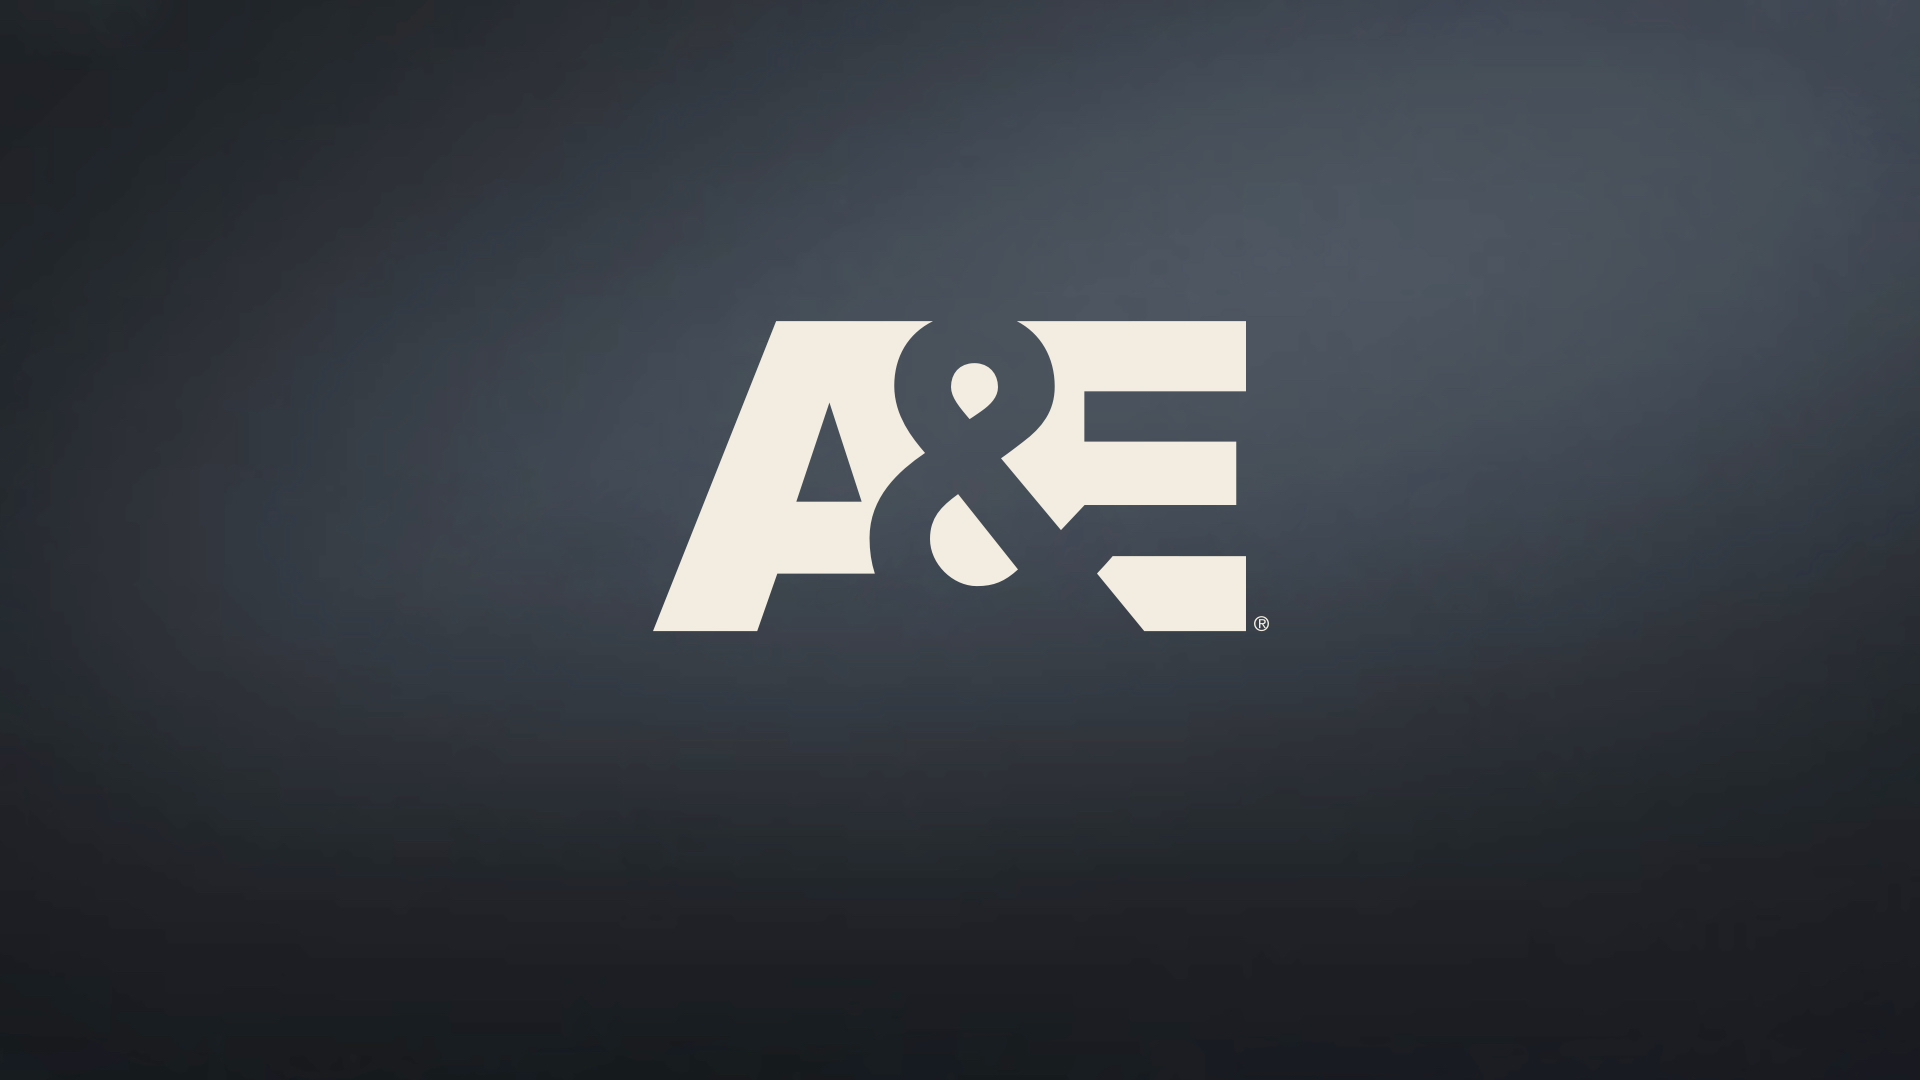 a&e tv schedule | a&e